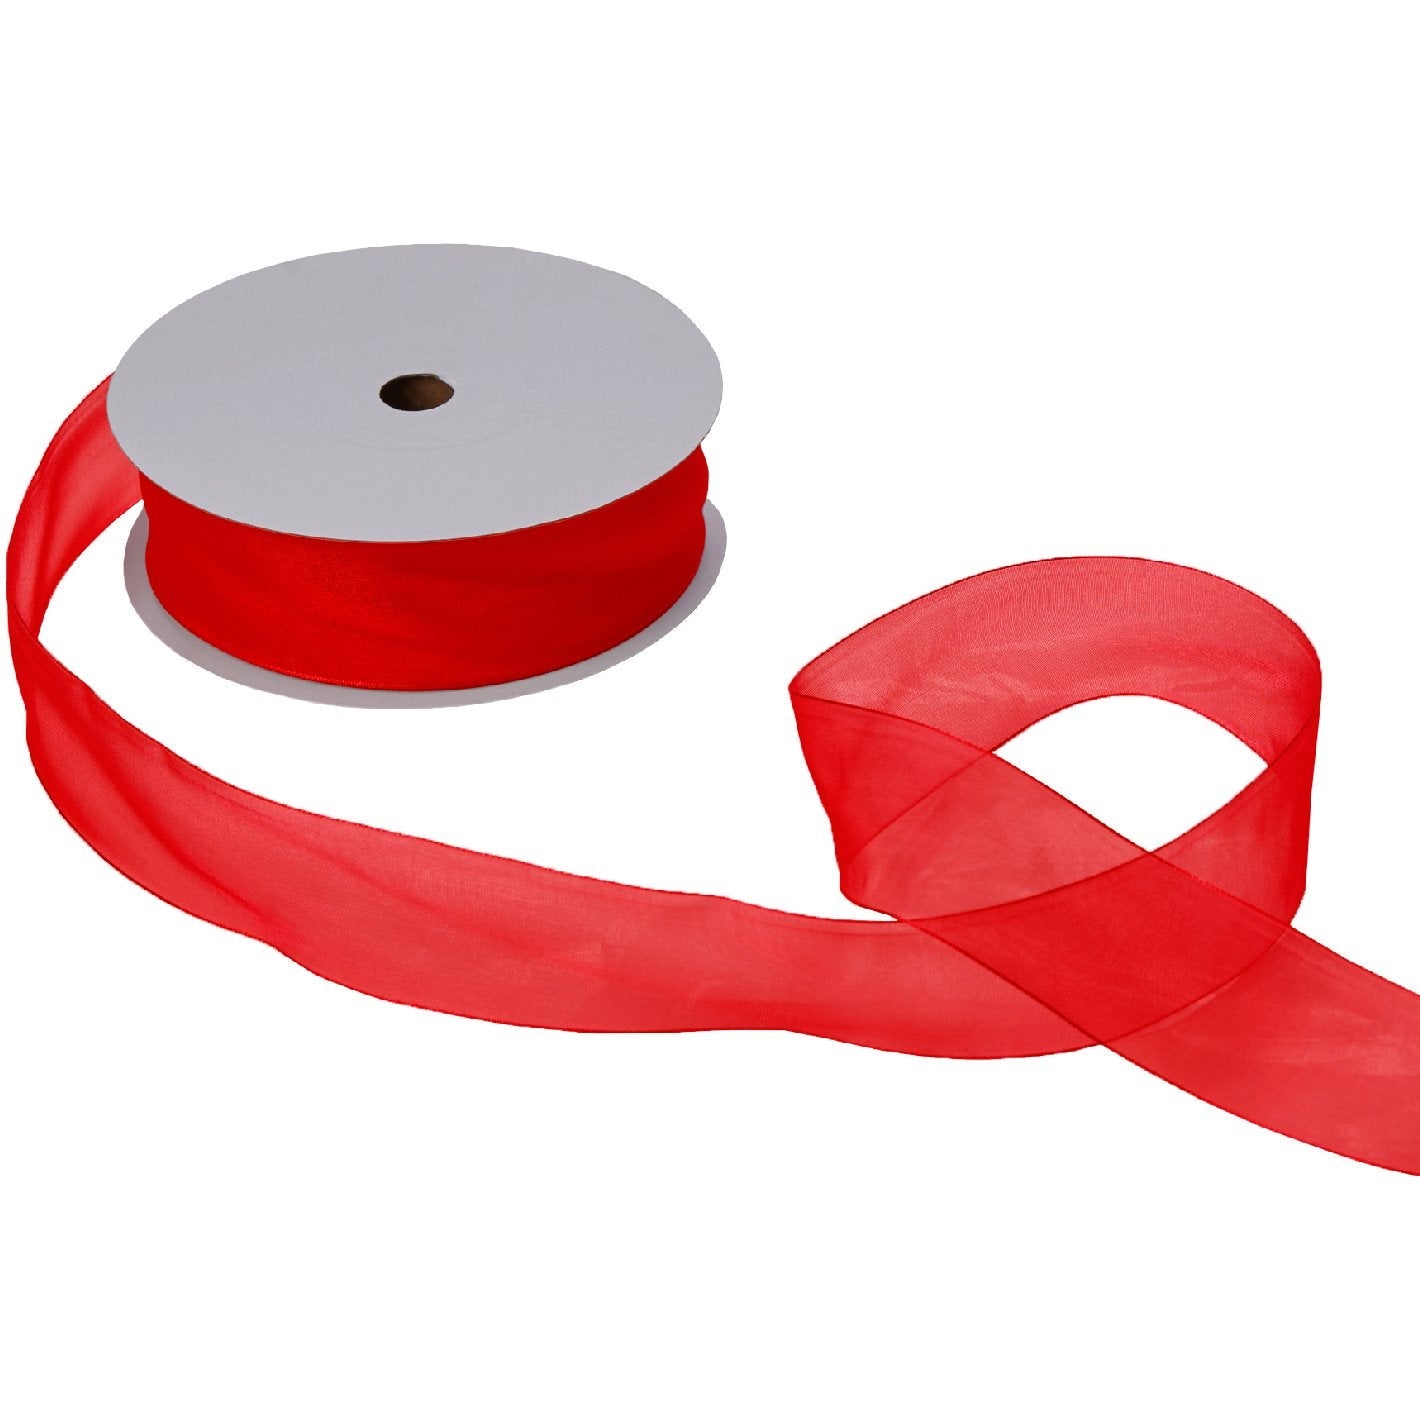 Jillson & Roberts Organdy Sheer Ribbon, 1 1/2" Wide x 100 Yards, Red